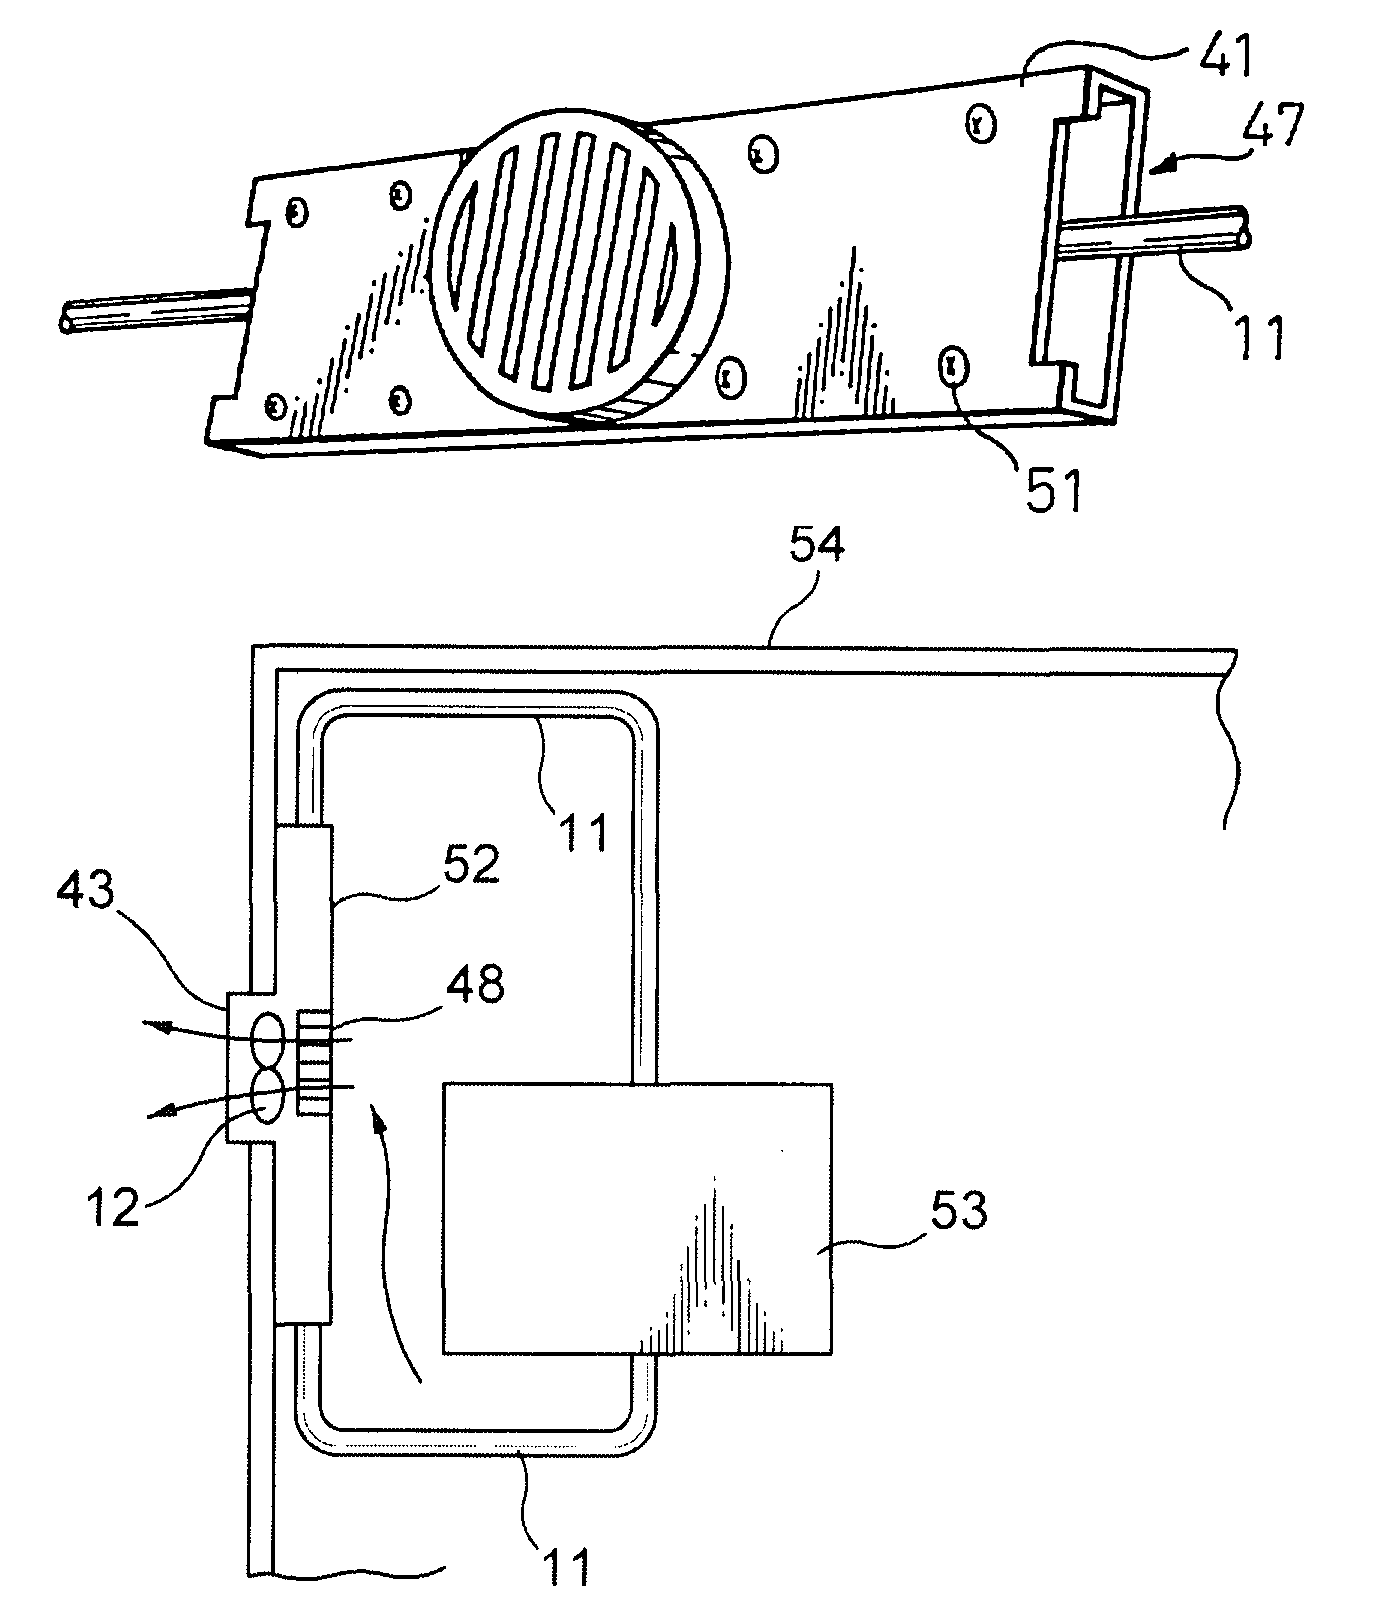 Heat sink and information processor using heat sink